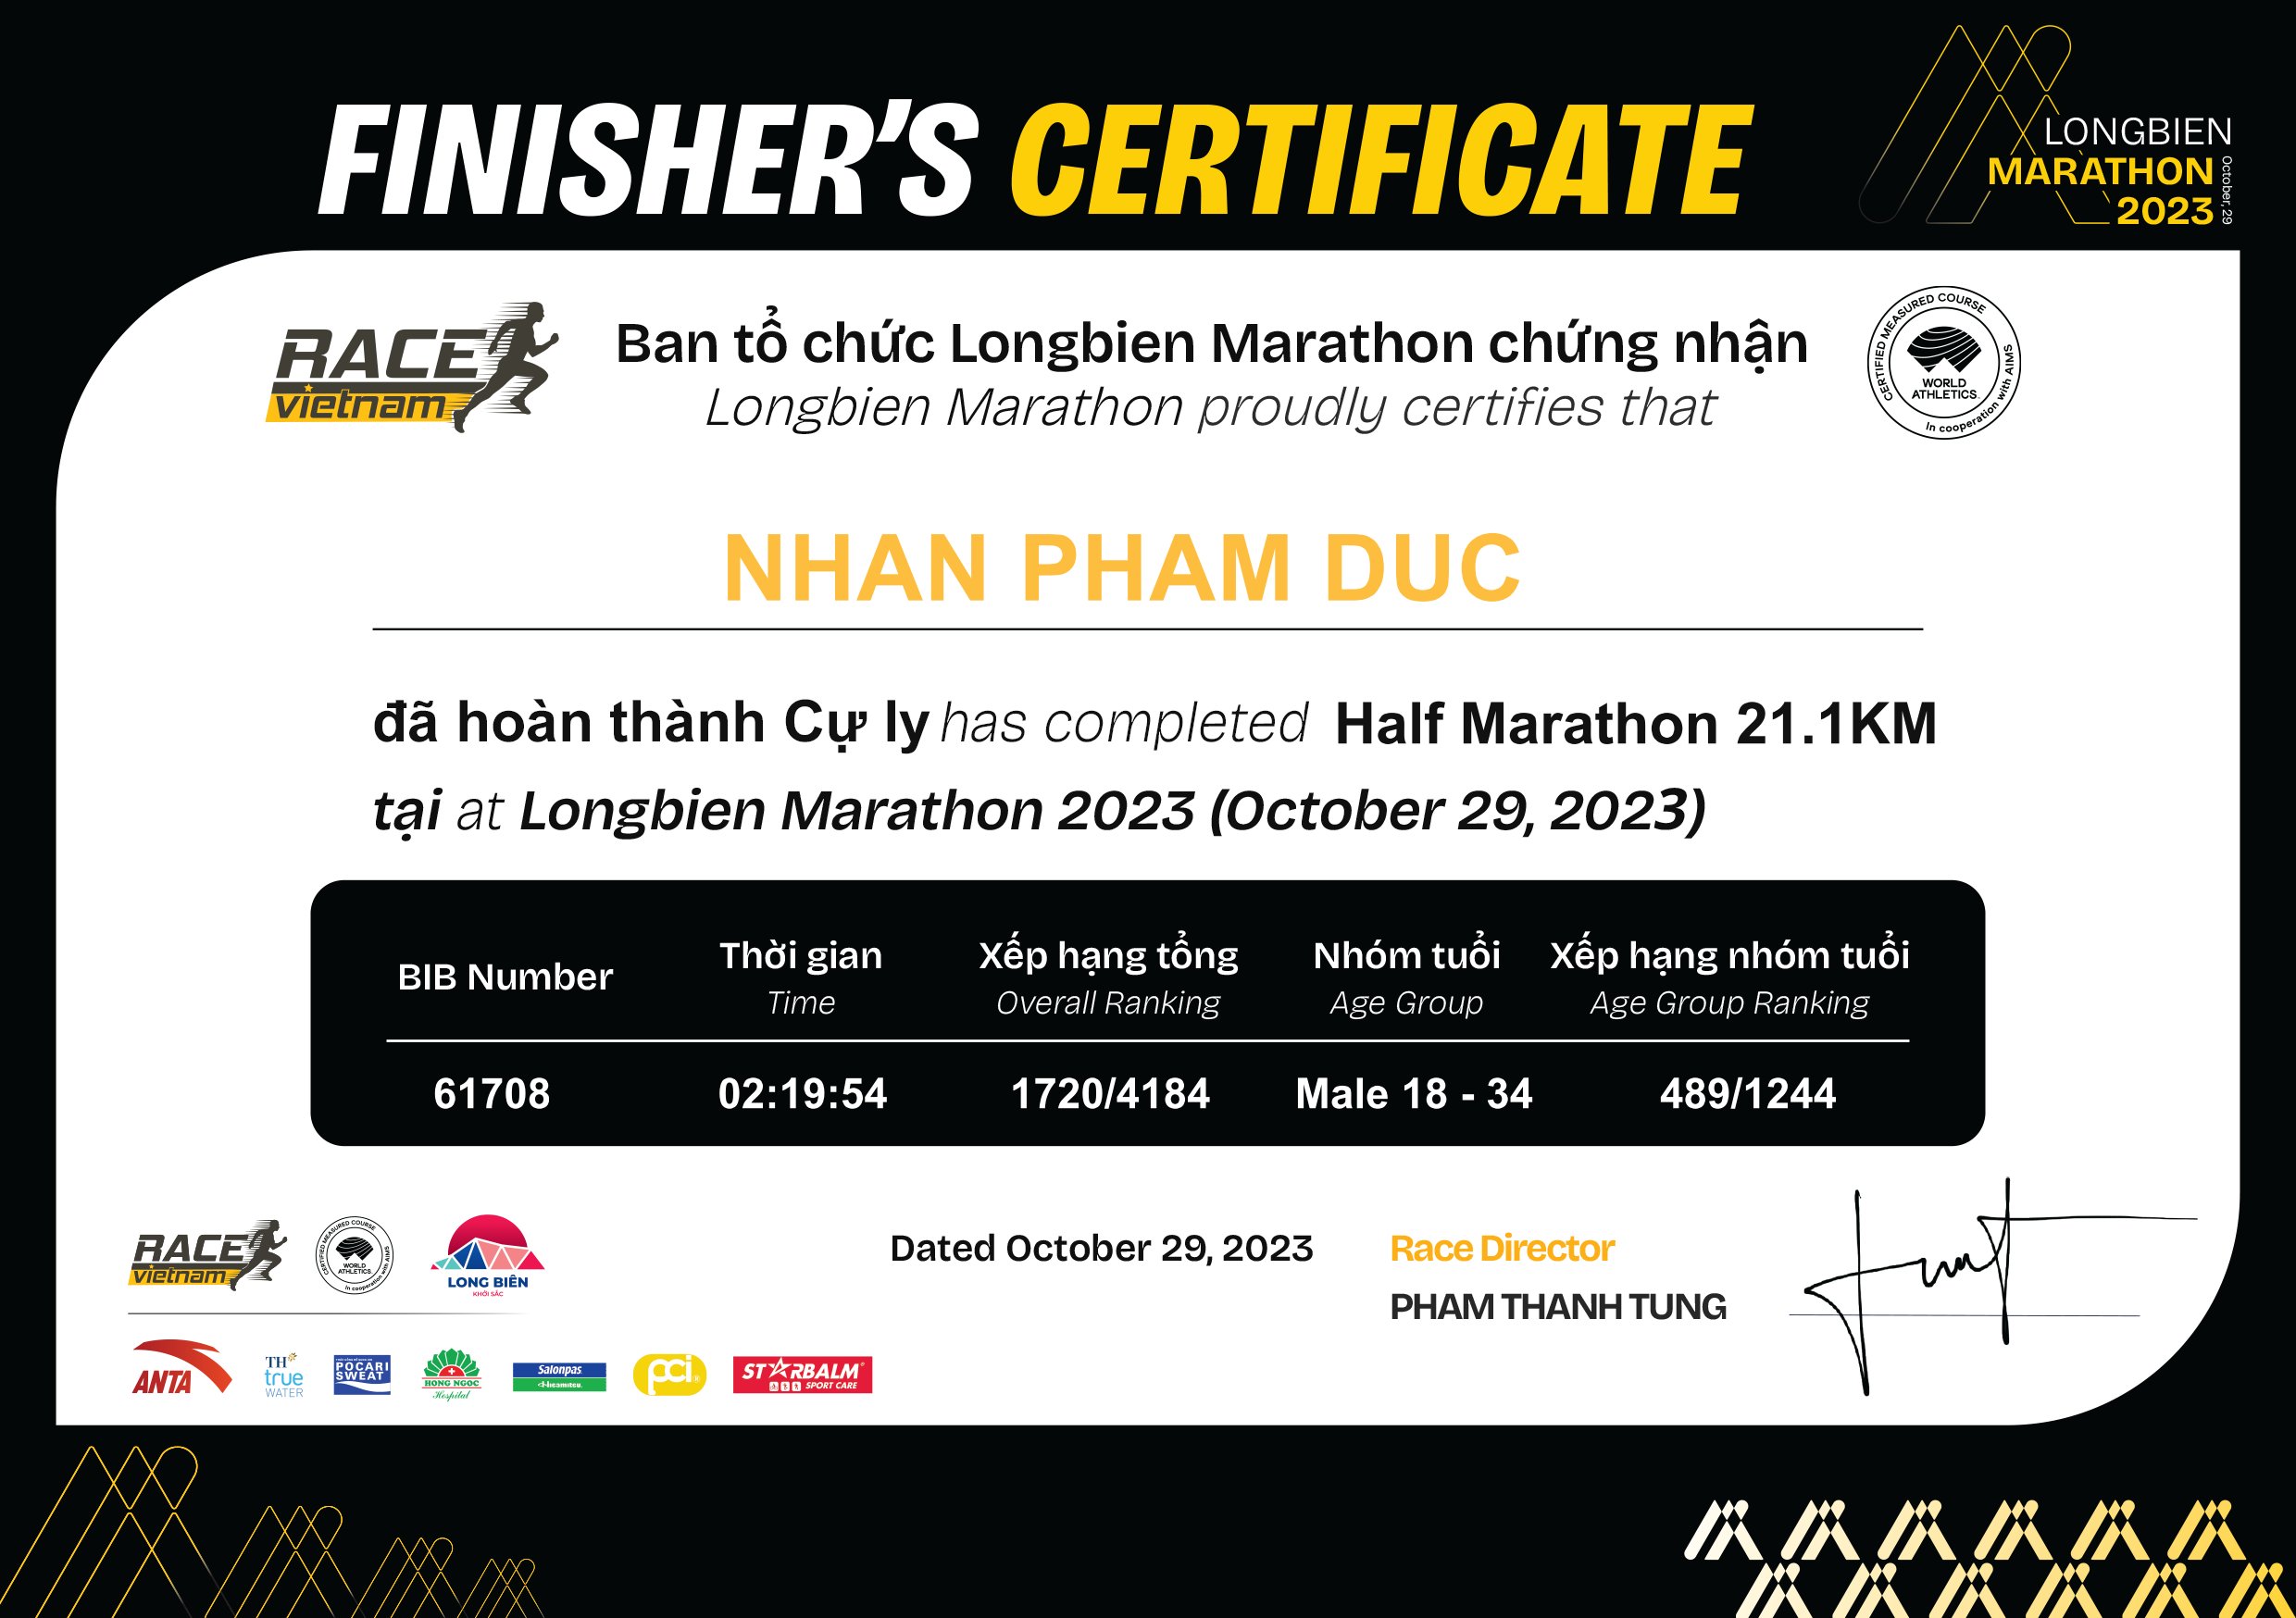 61708 - Nhan Pham Duc